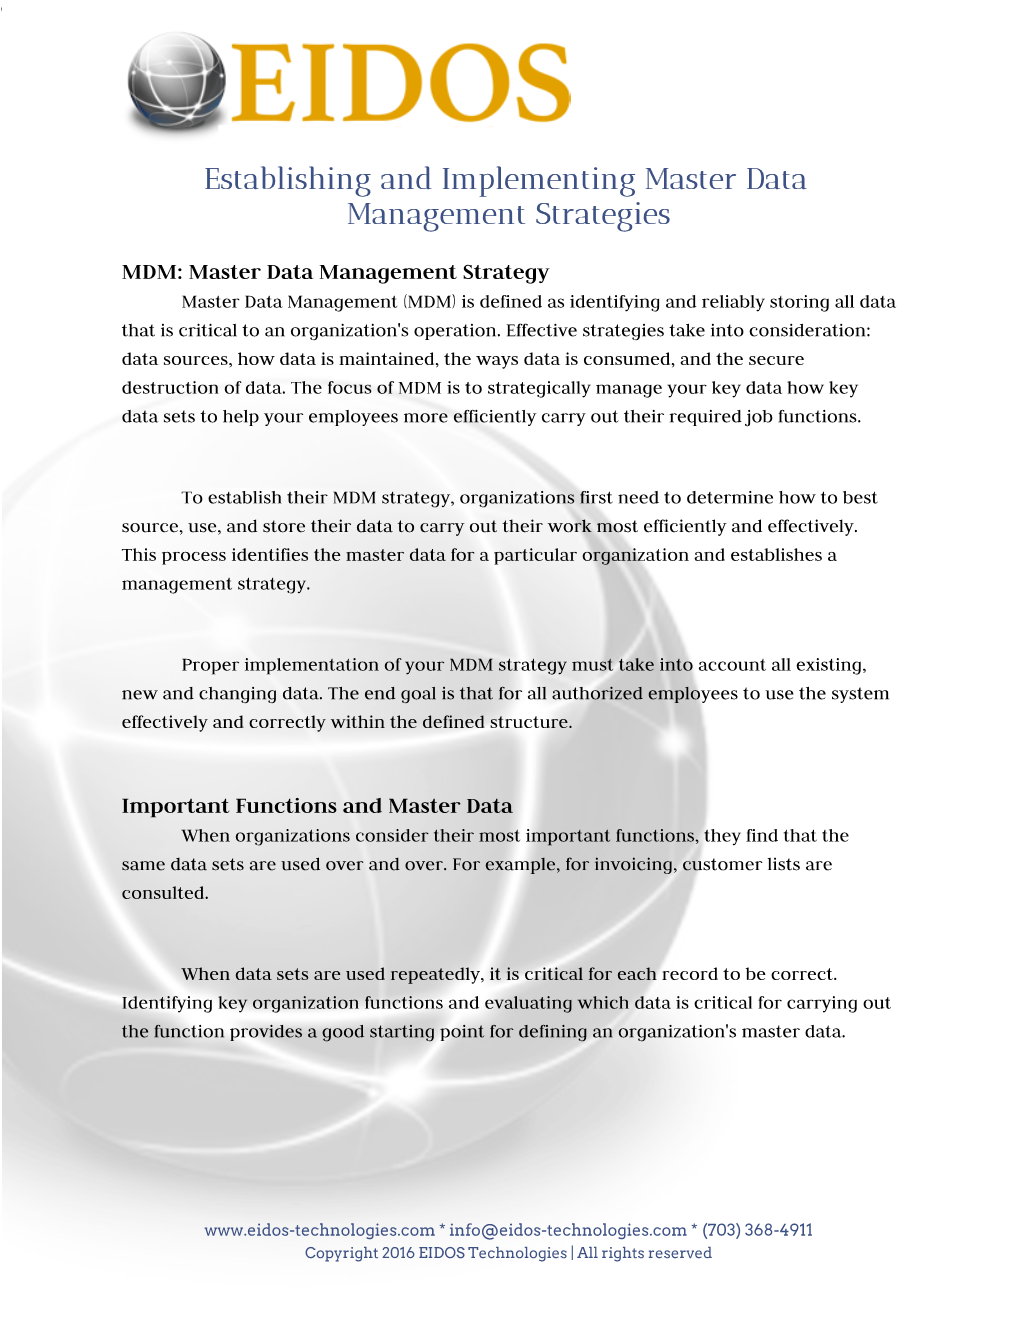 Establishing and Implementing Master Data Management Strategies